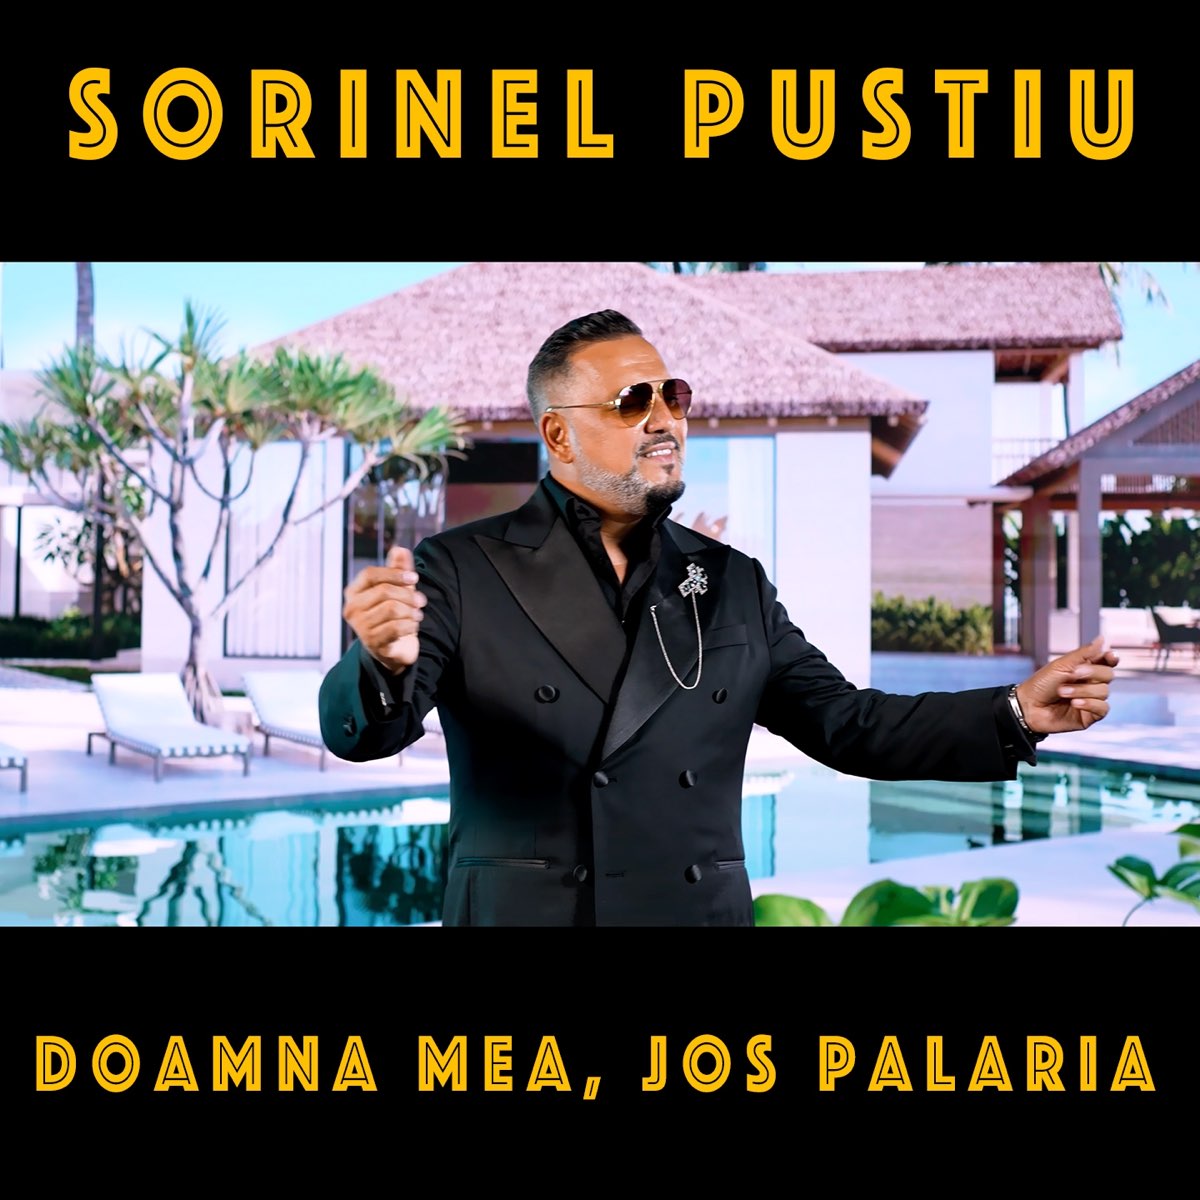 Doamna mea, Jos palaria - Single by Sorinel Pustiu on Apple Music